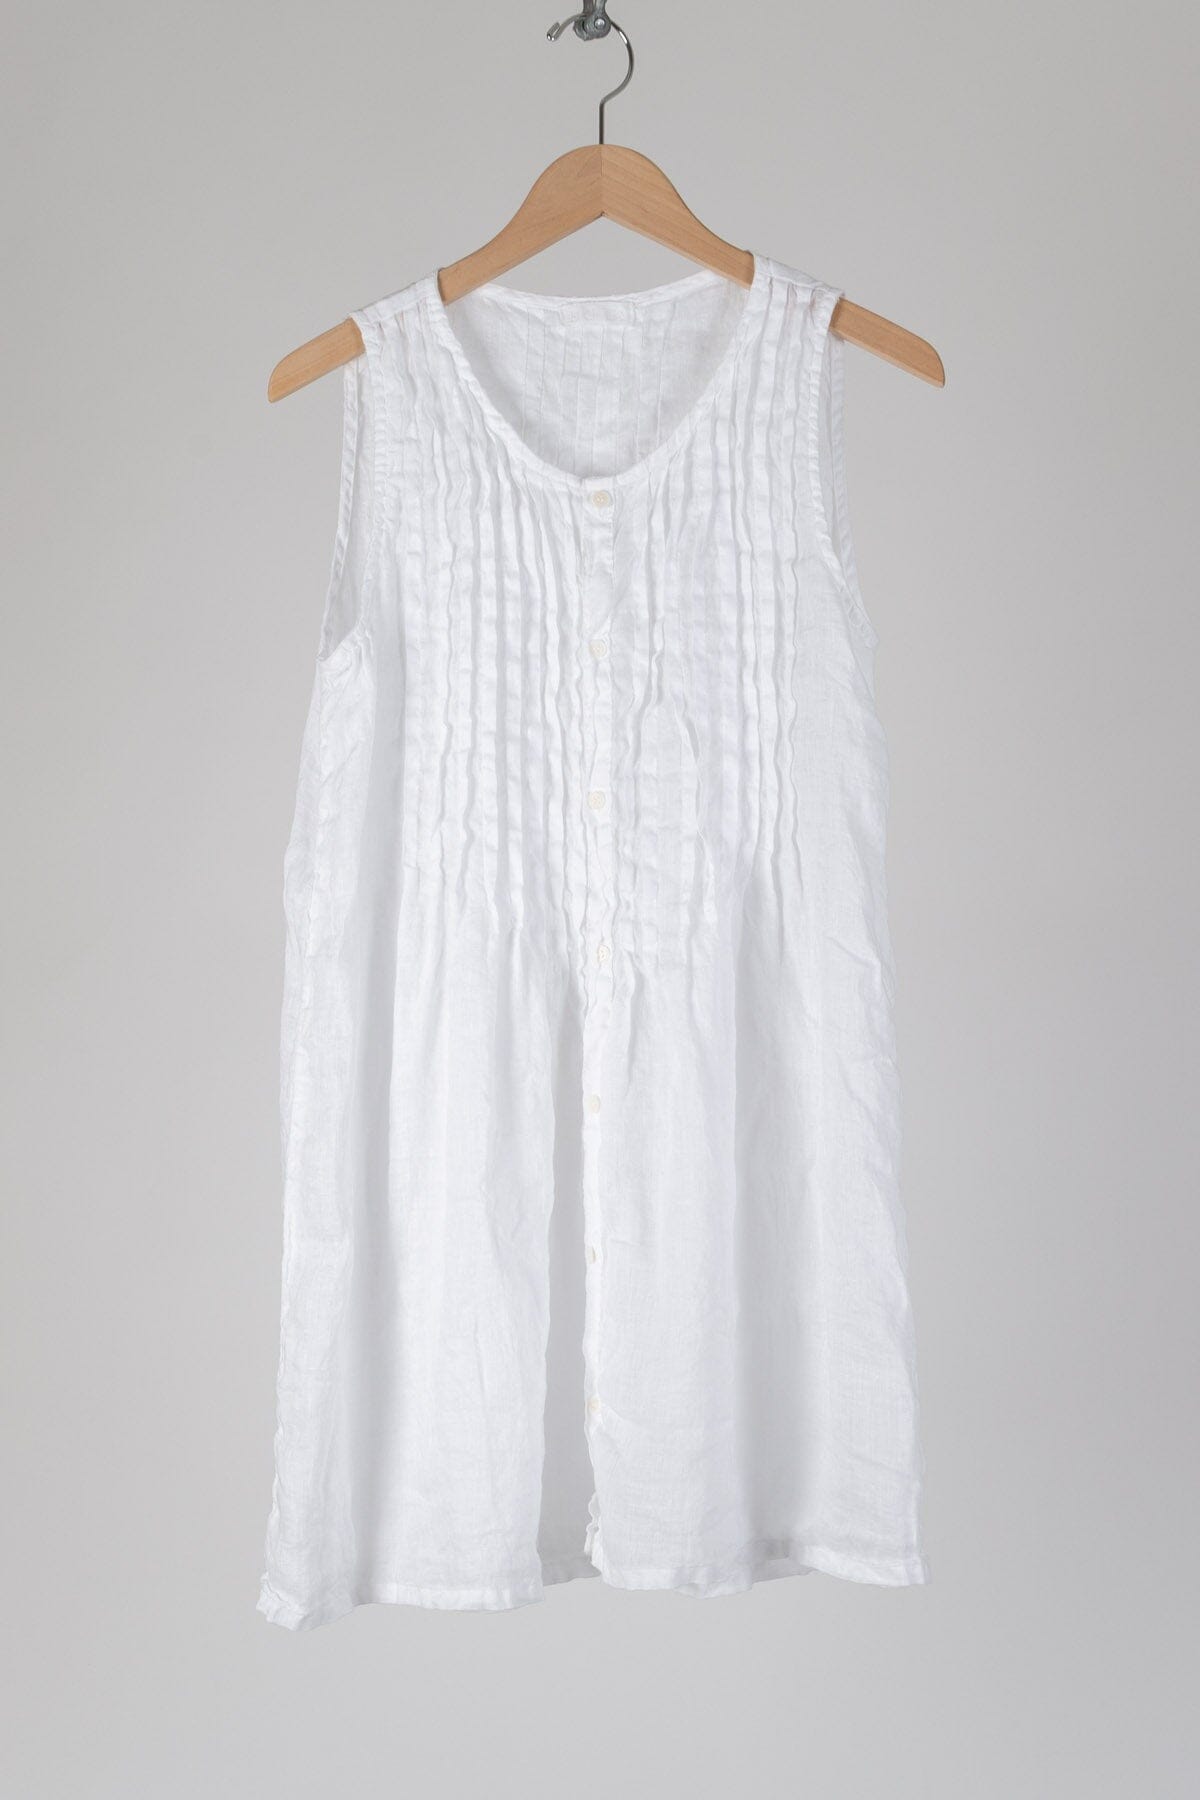 Lindsey - Linen S10 - Linen Shirt/Top/Tunic CP Shades white